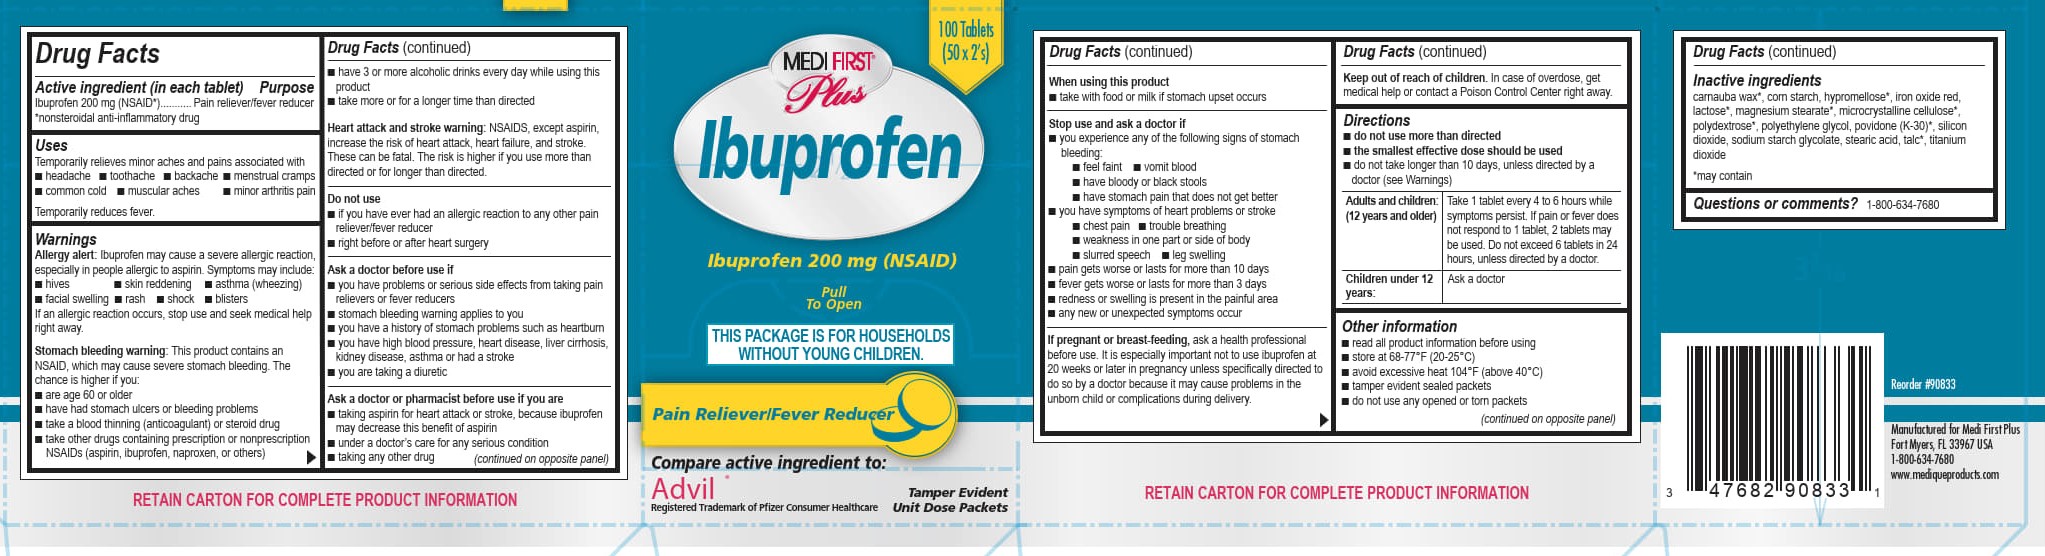 100R Ibuprofen 90833 5-3-23 GR